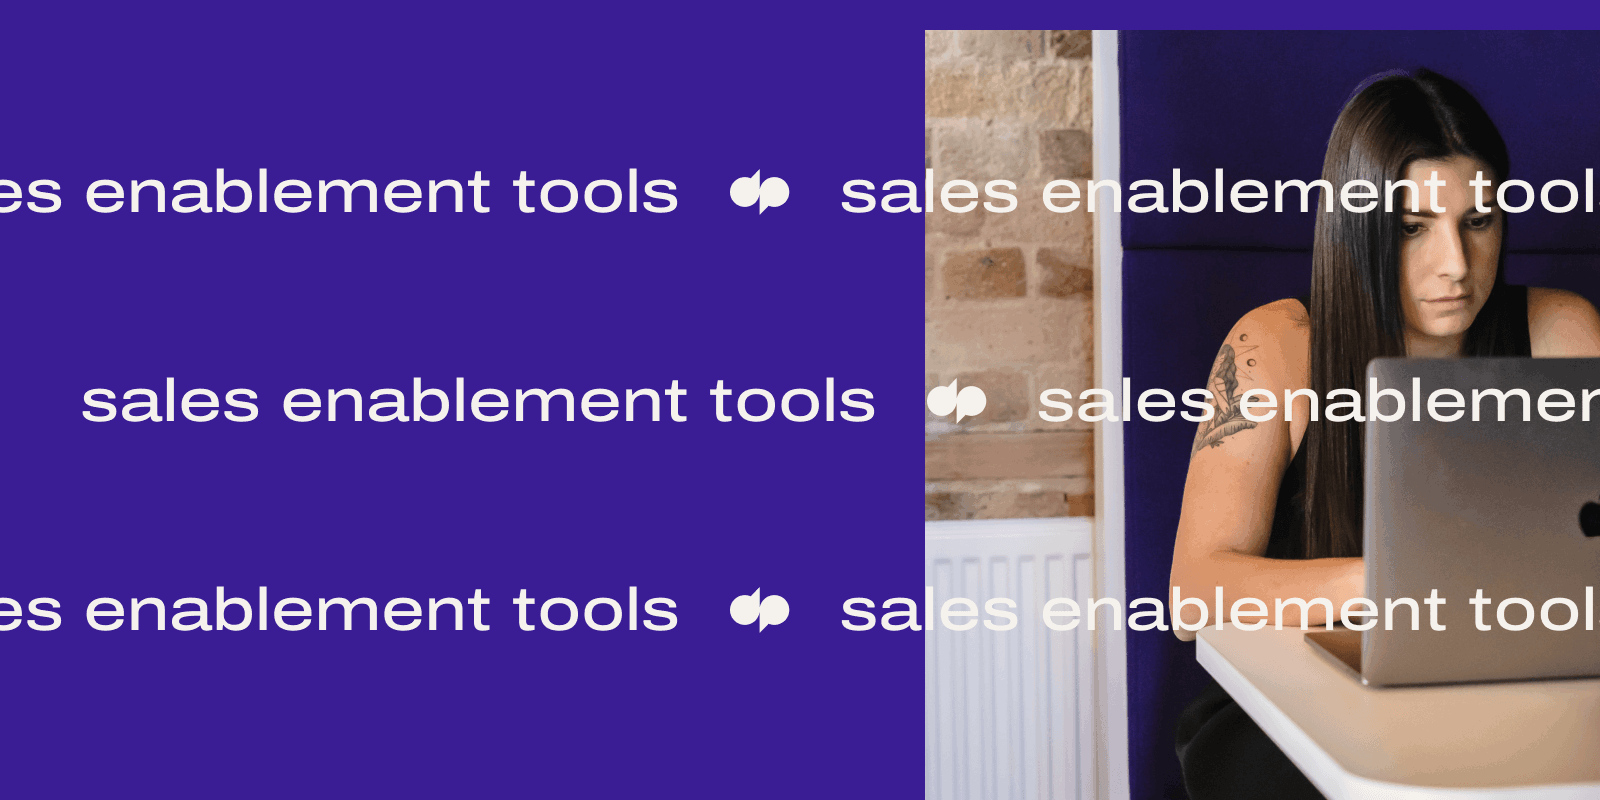 sales-enablement-tools-header